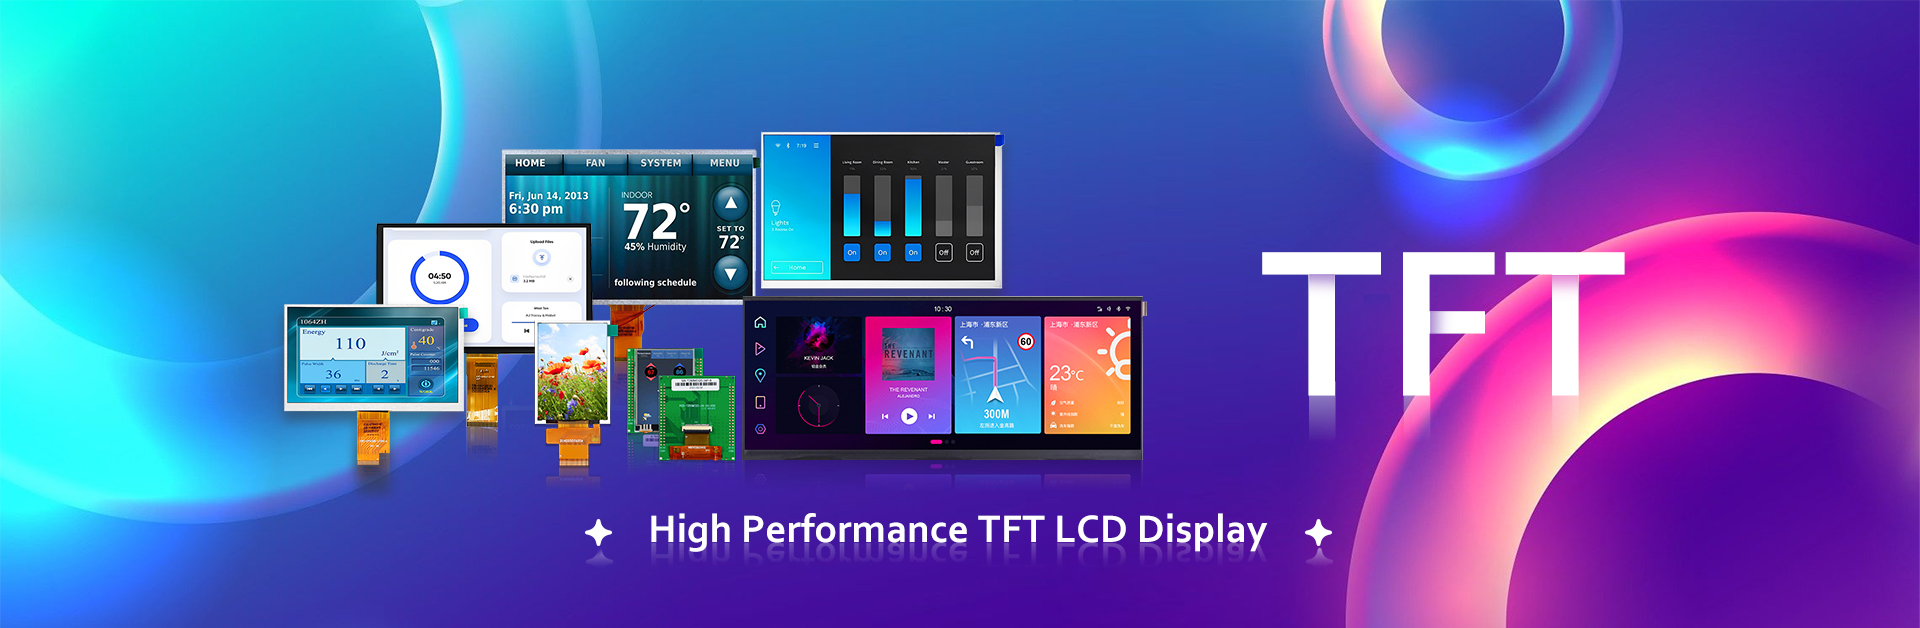 High performance TFT LCD displays